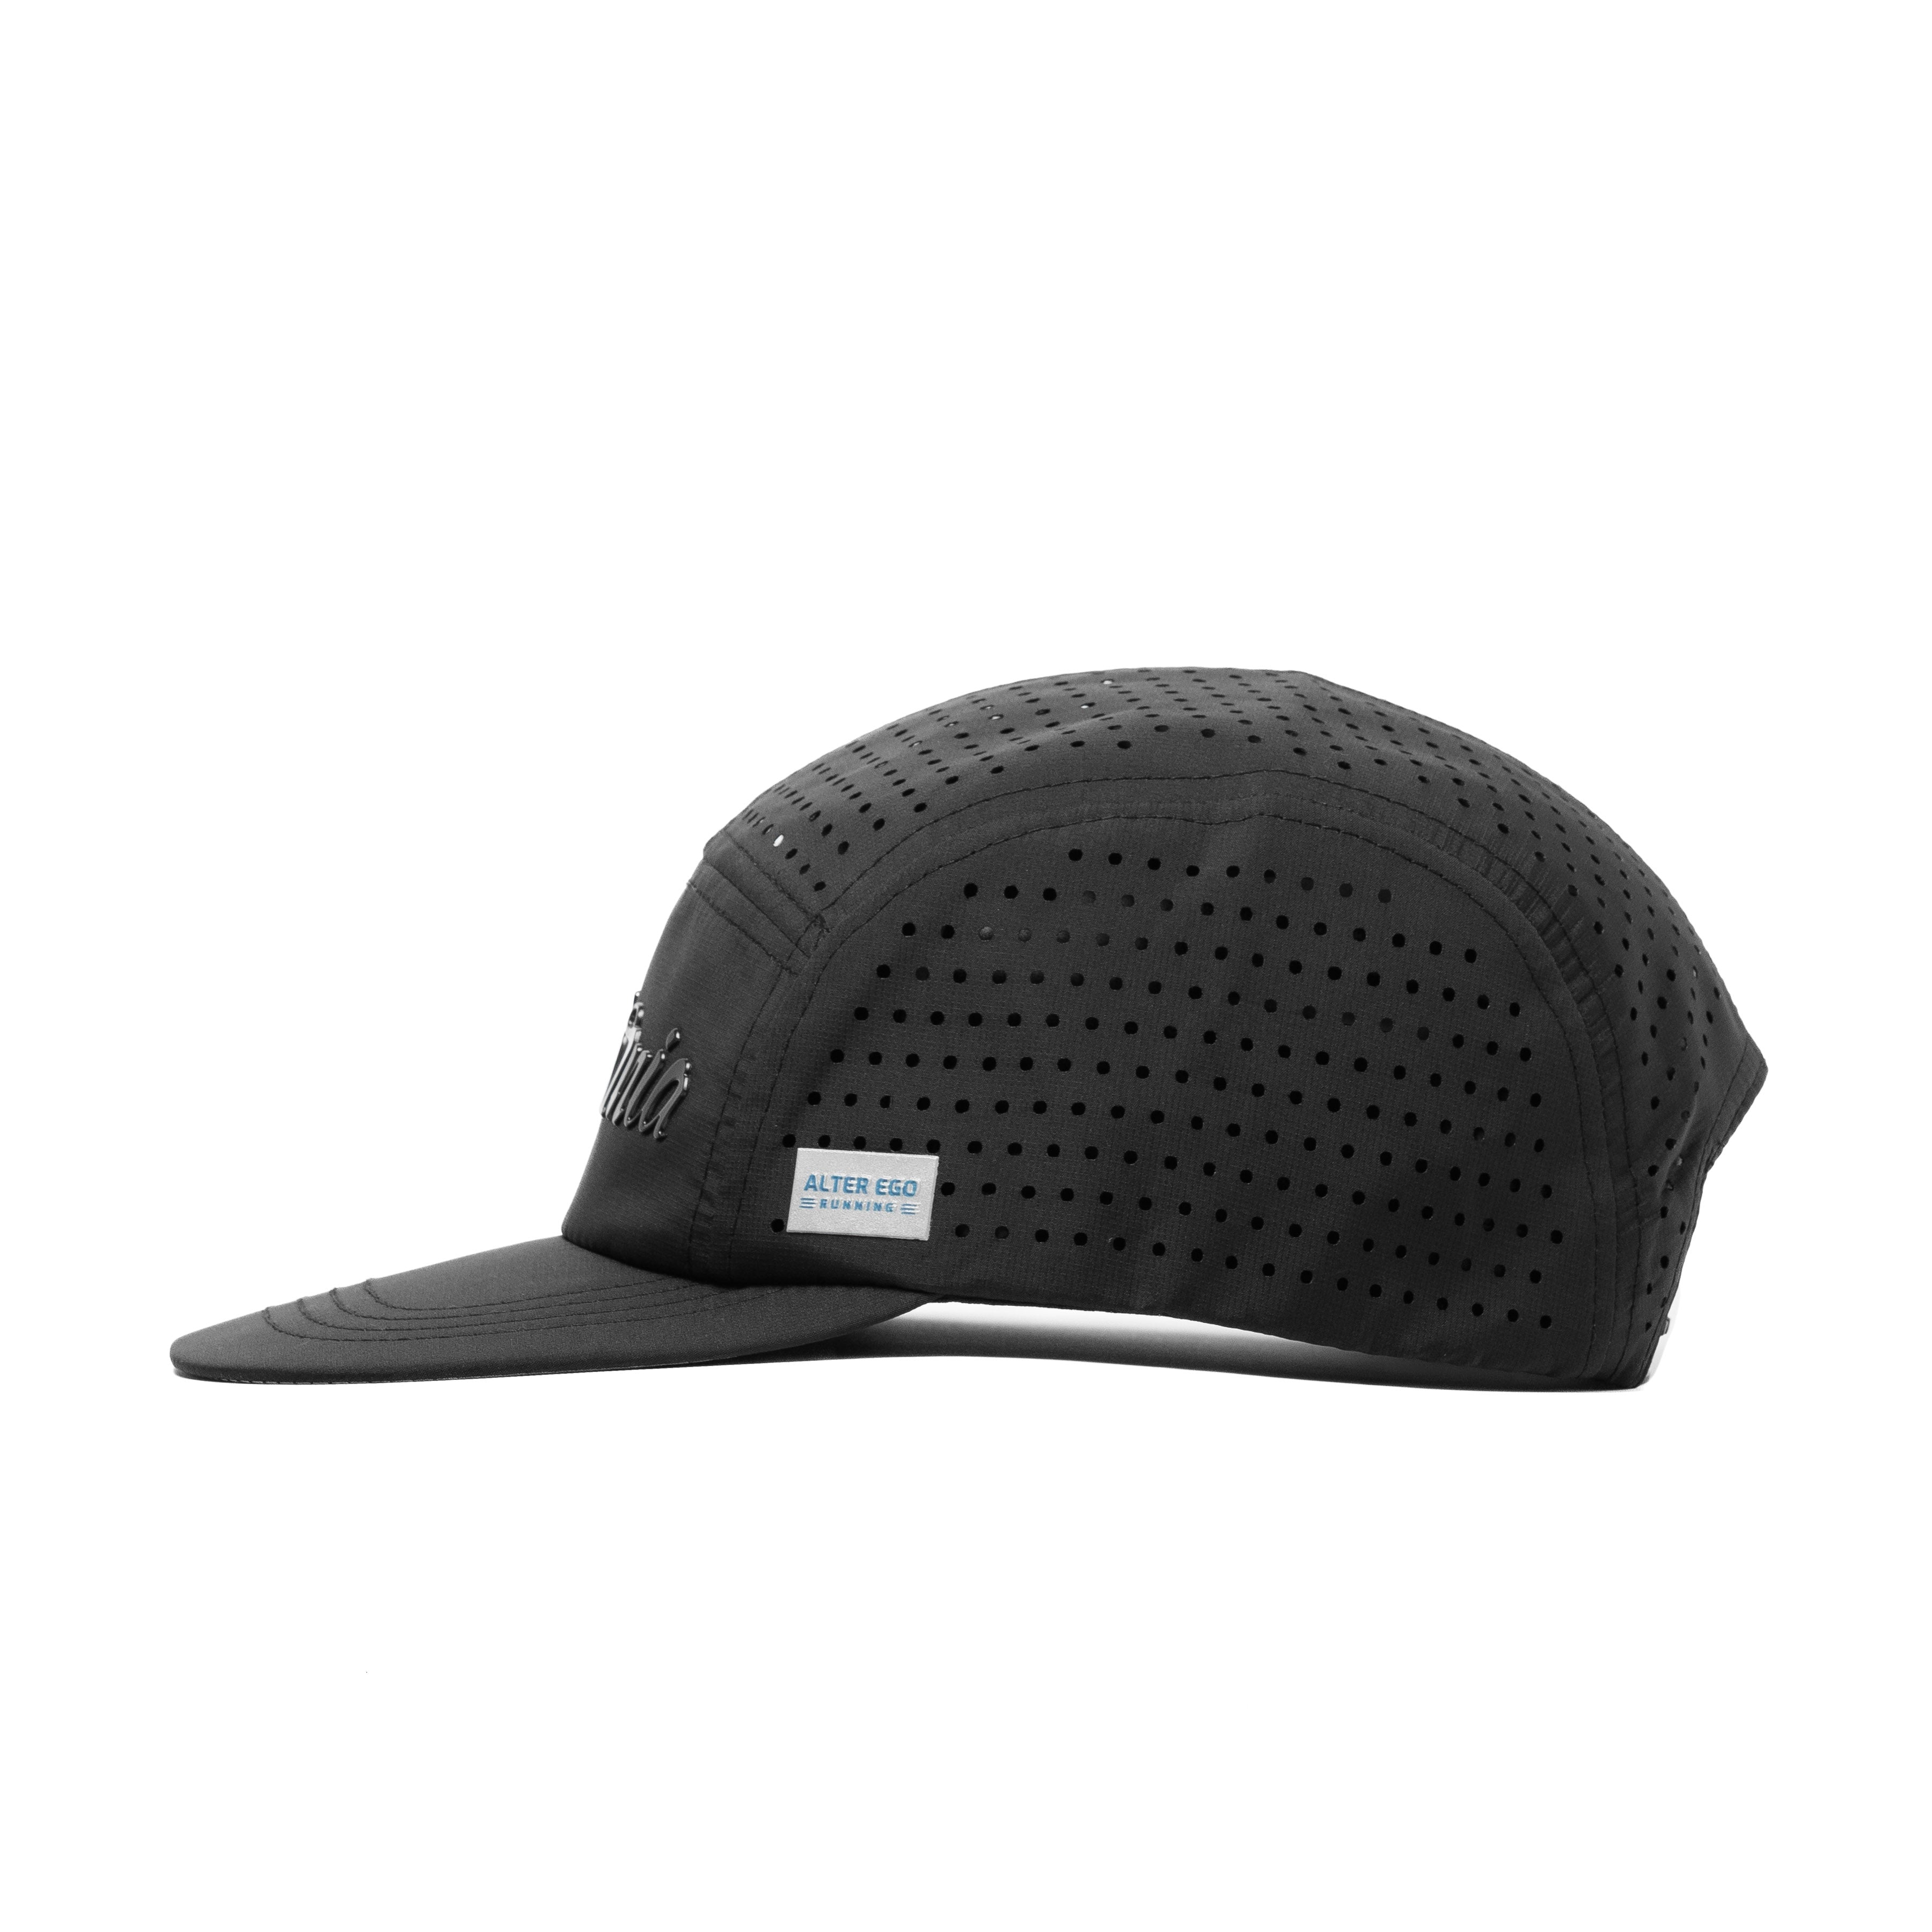 Coaster Splash Hat One Size Fits Most / Black Retro Rise